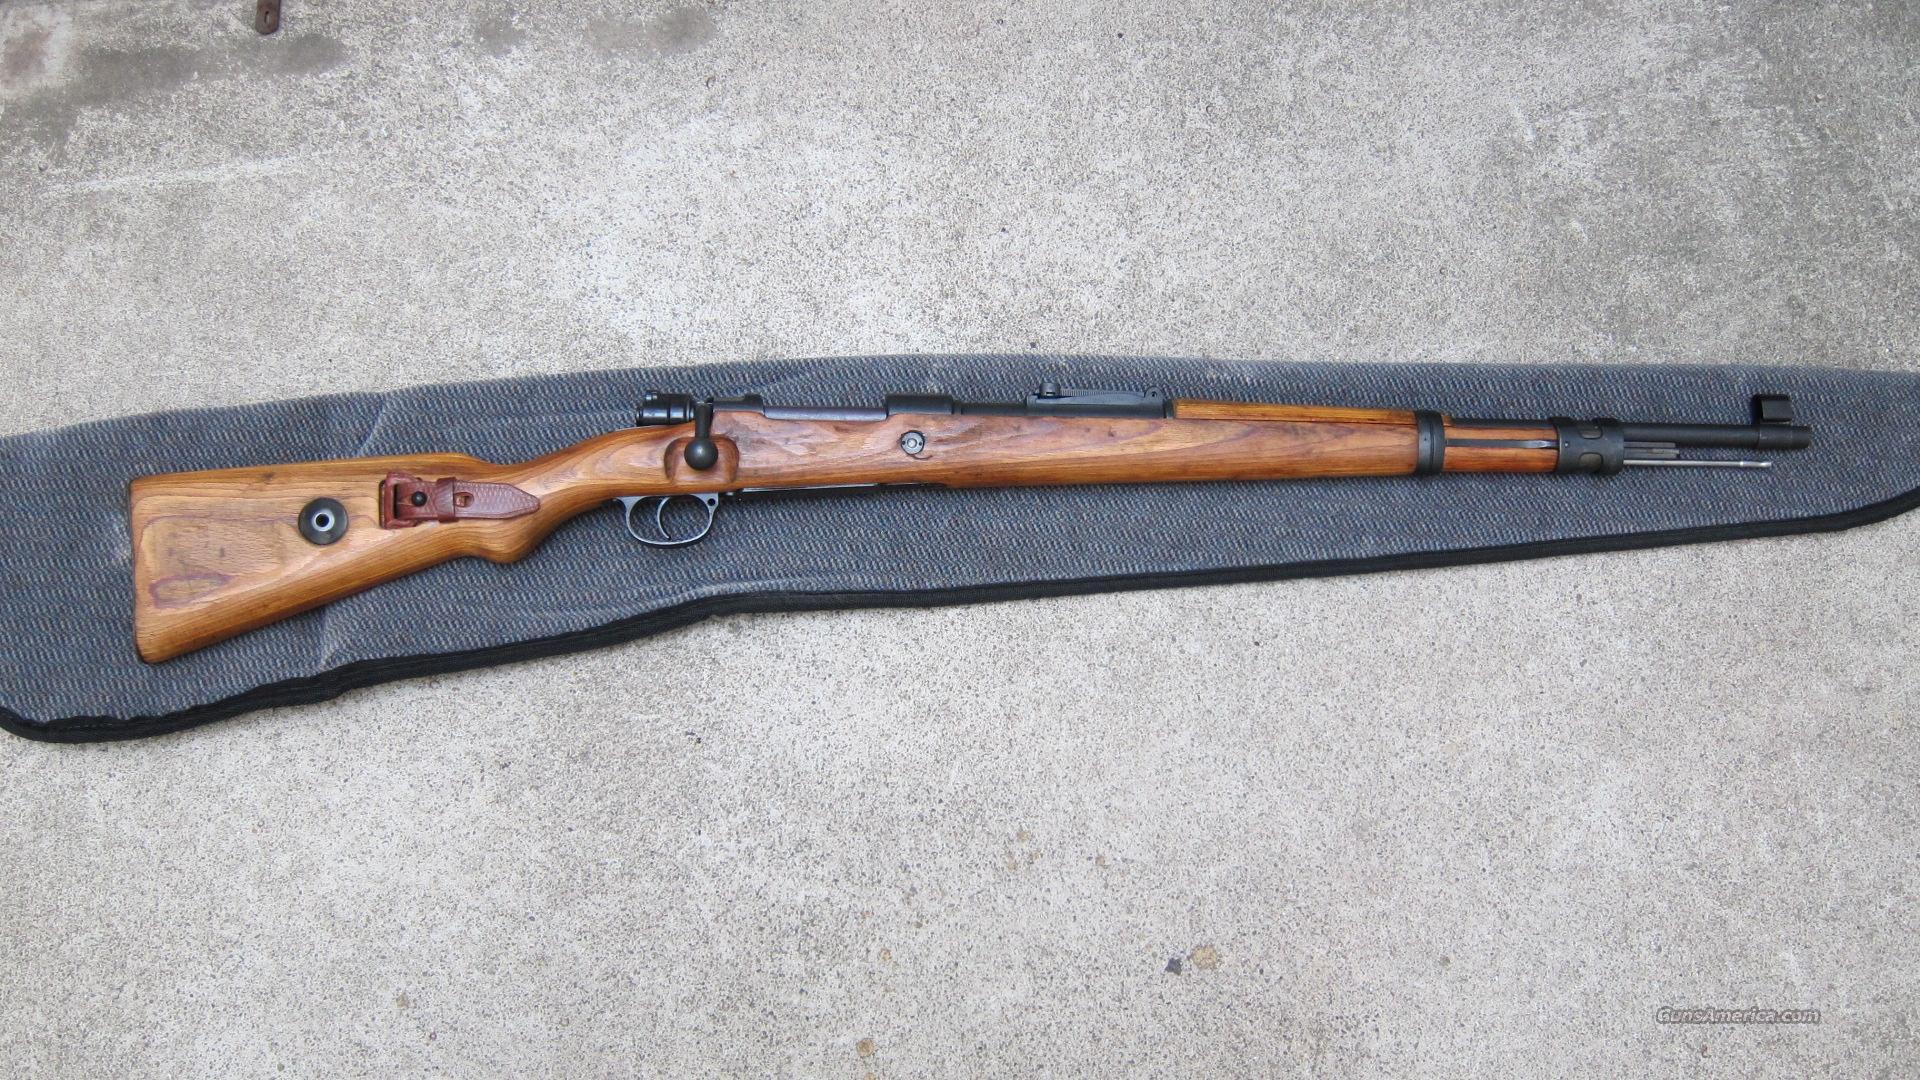 karabiner 98k rifle